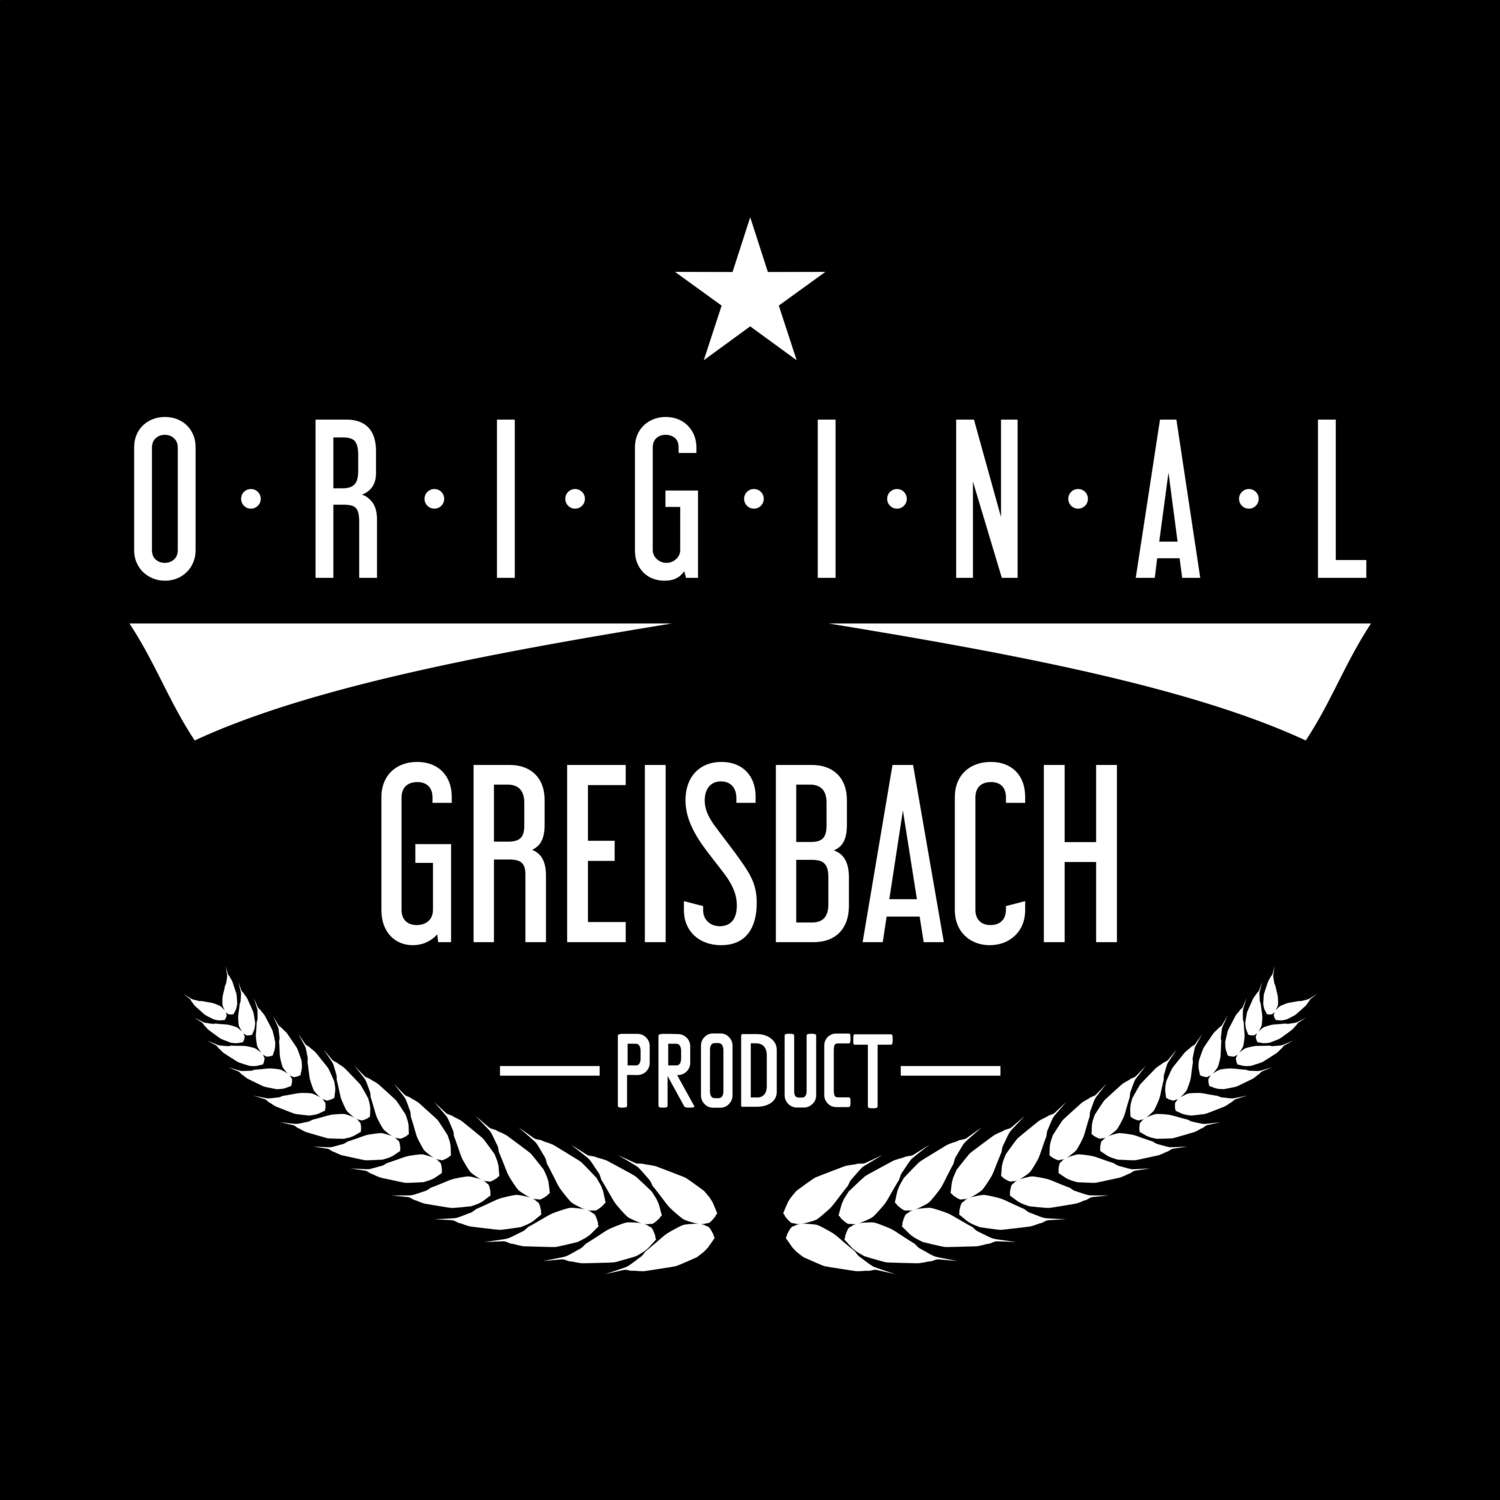 Greisbach T-Shirt »Original Product«